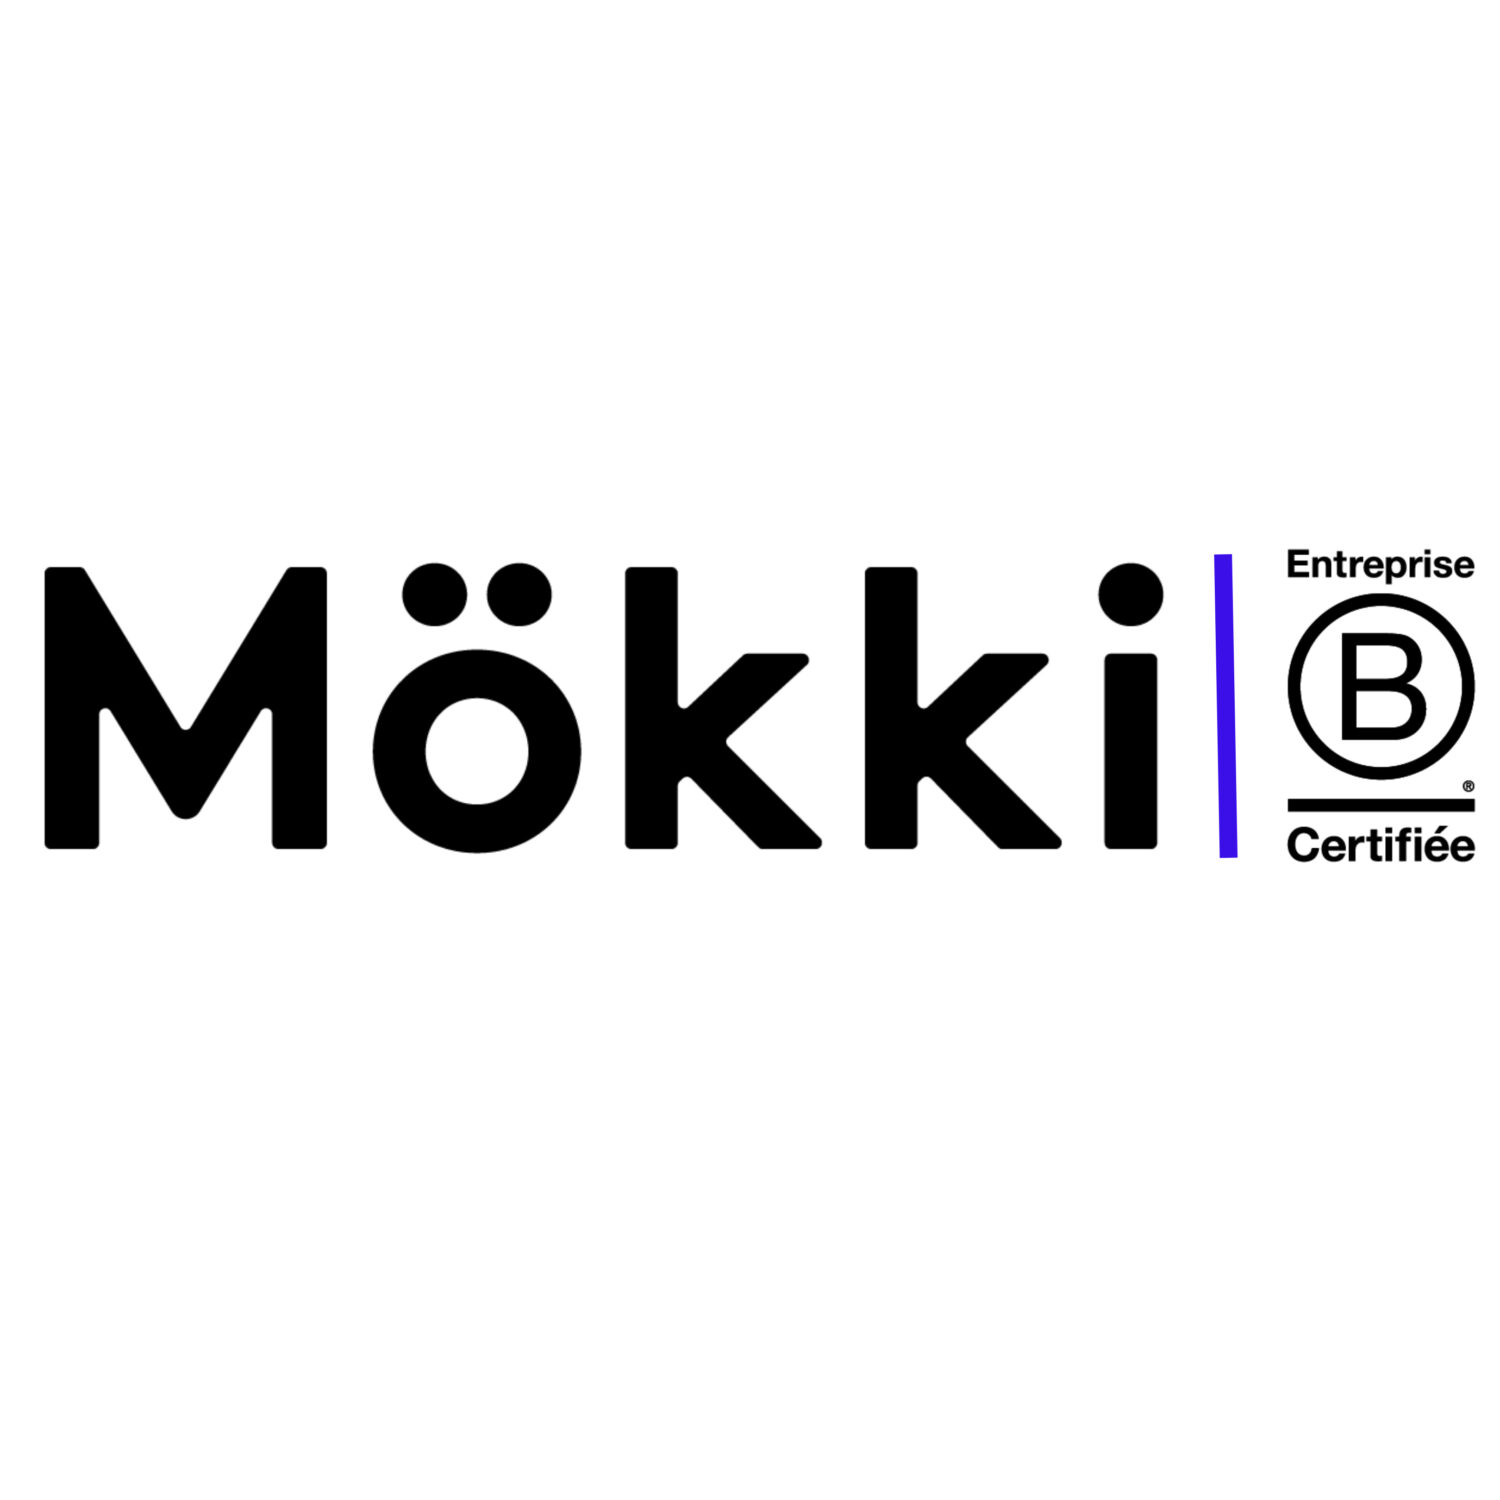 Illustration de la news Mökki ouvre son premier « Mökki Light »